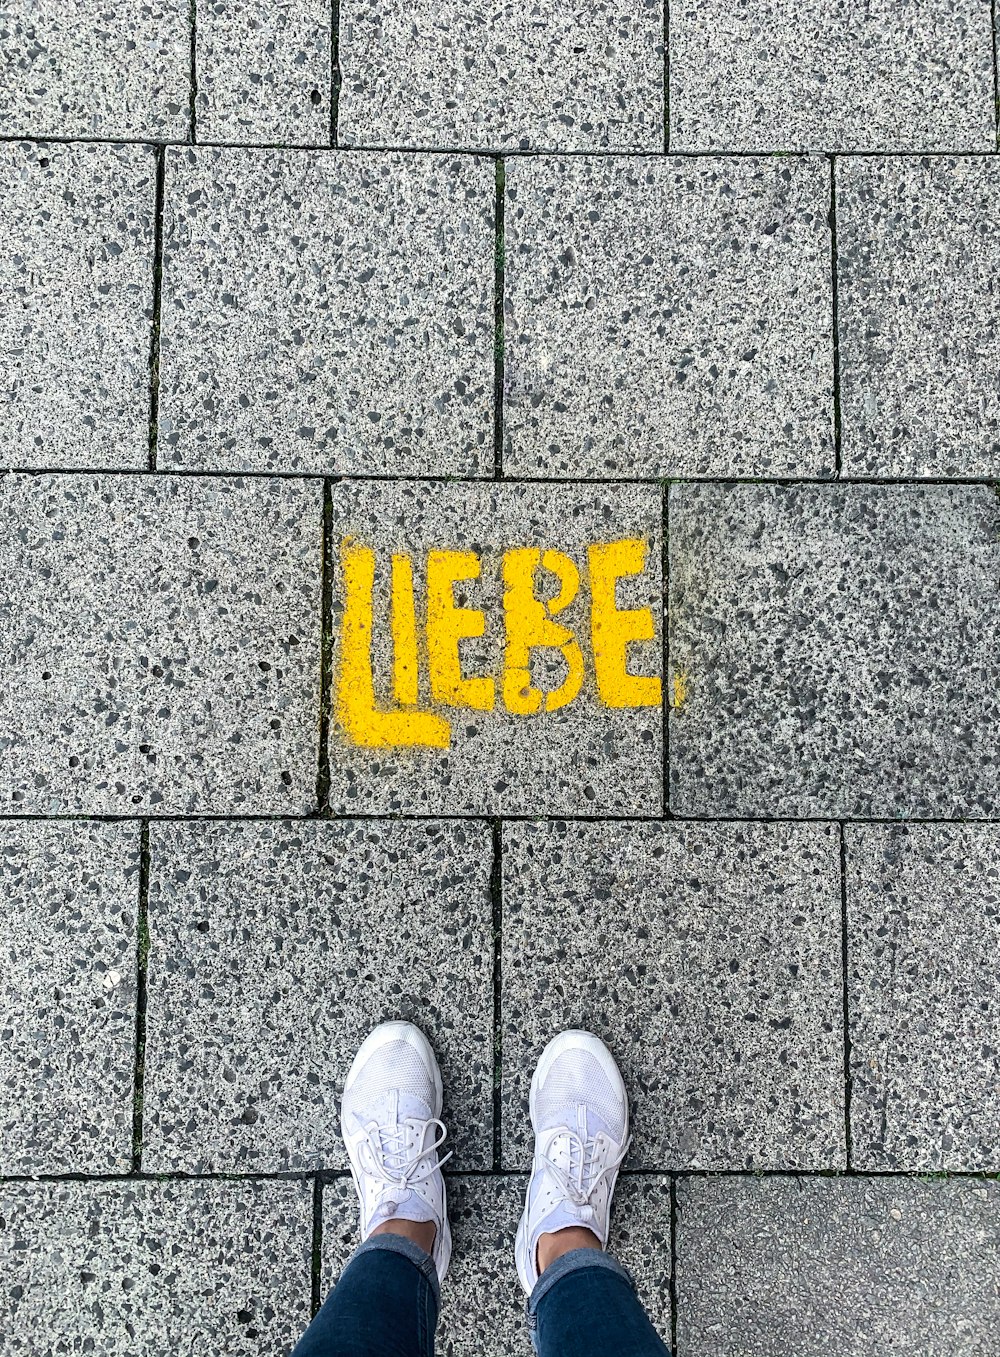 Una persona in piedi di fronte a un marciapiede con la parola Liebe dipinta su di esso